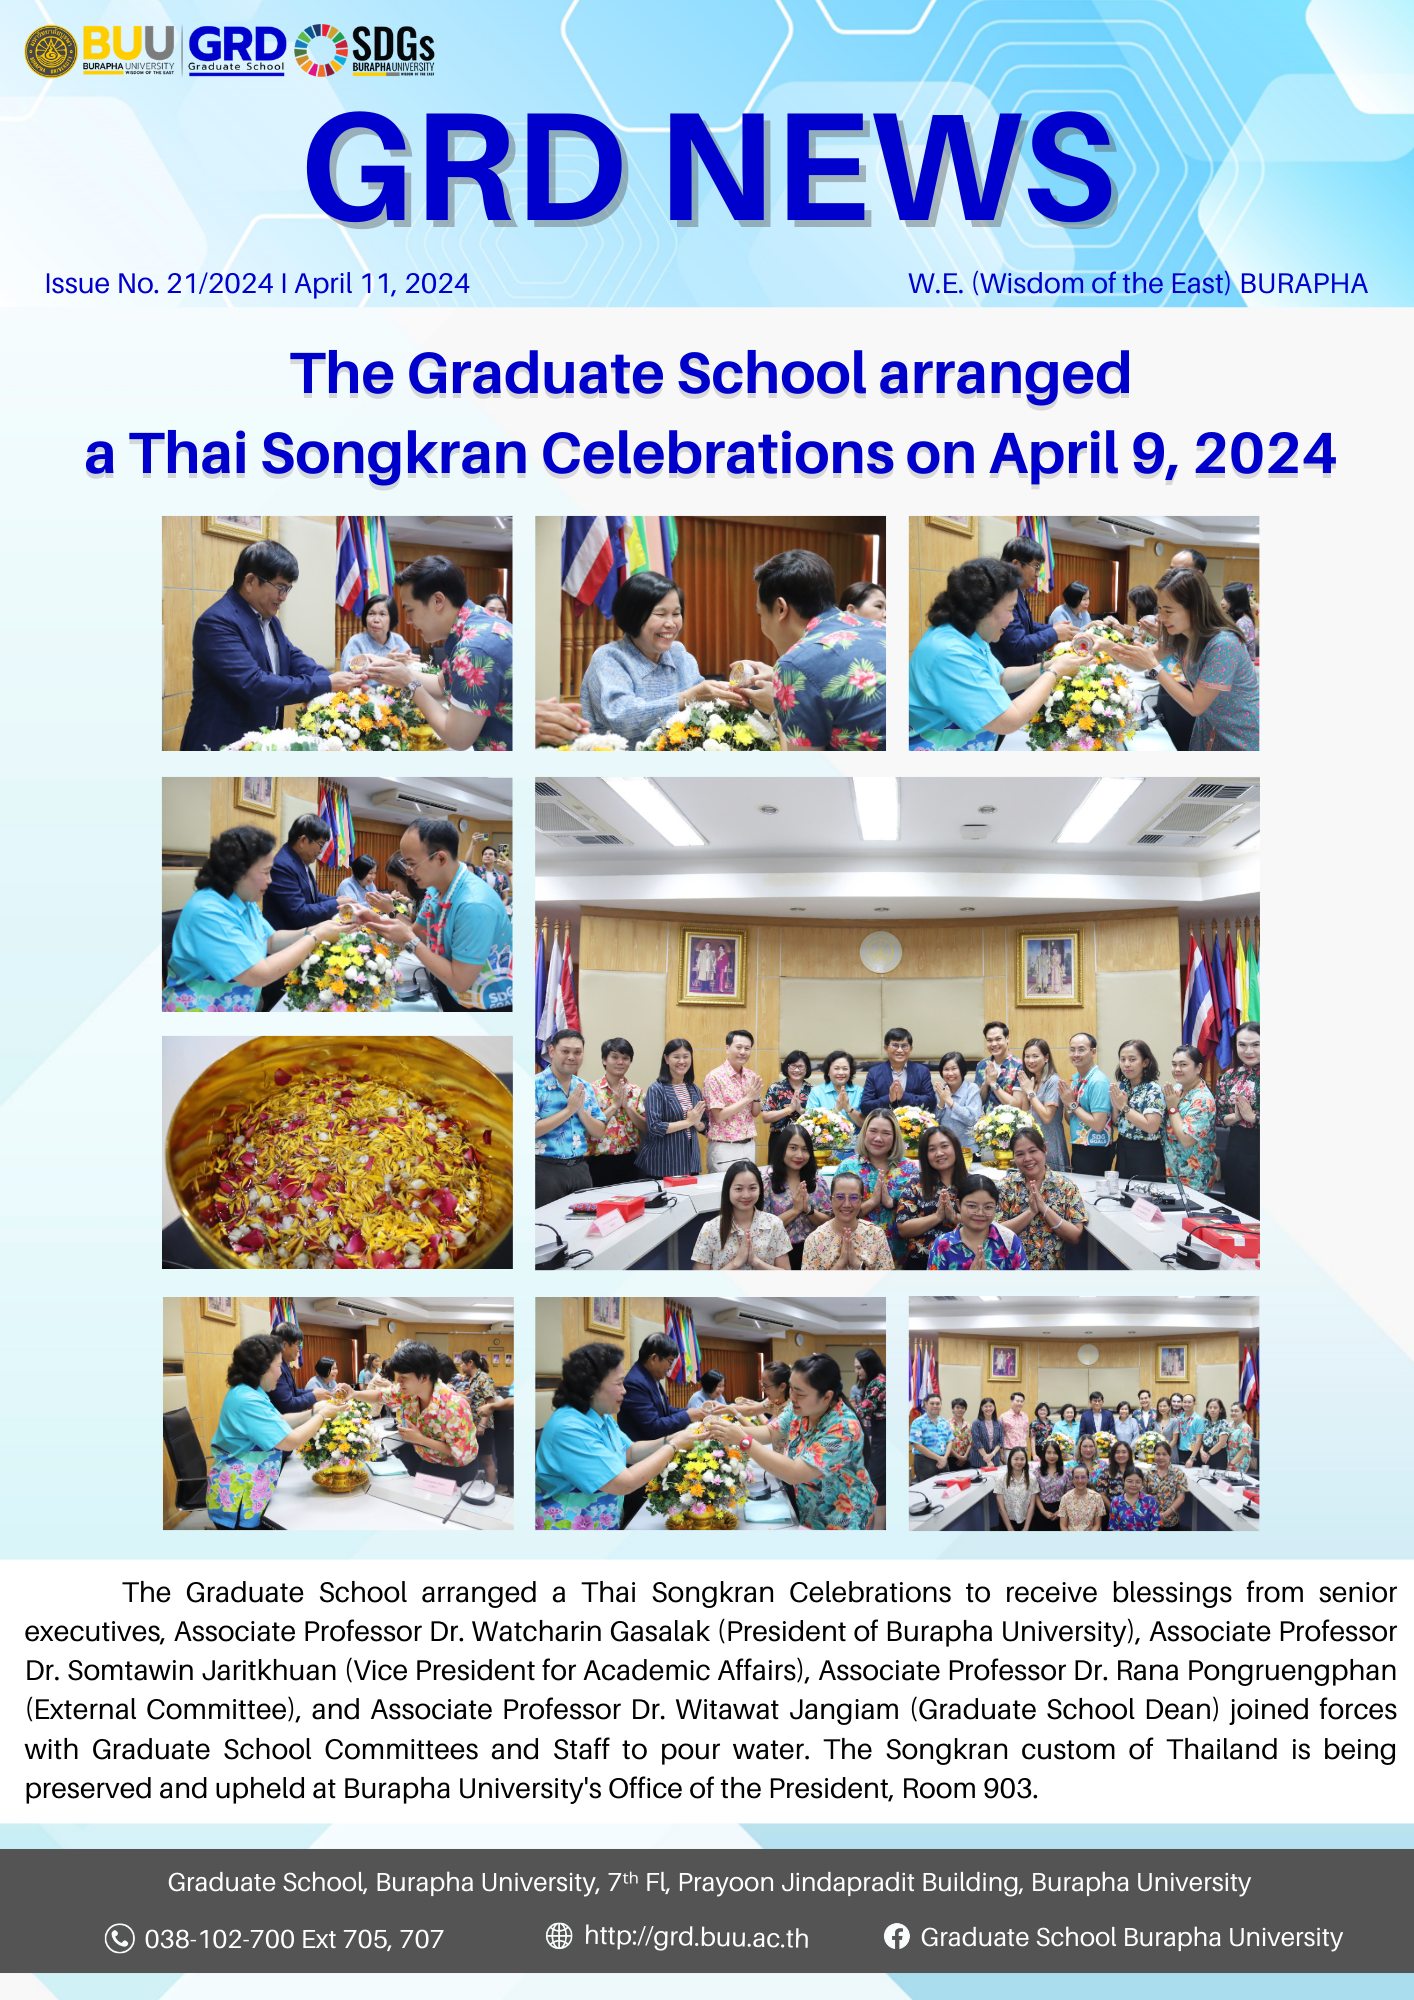 The Graduate School arranged a Thai Songkran Celebrations on April 9, 2024